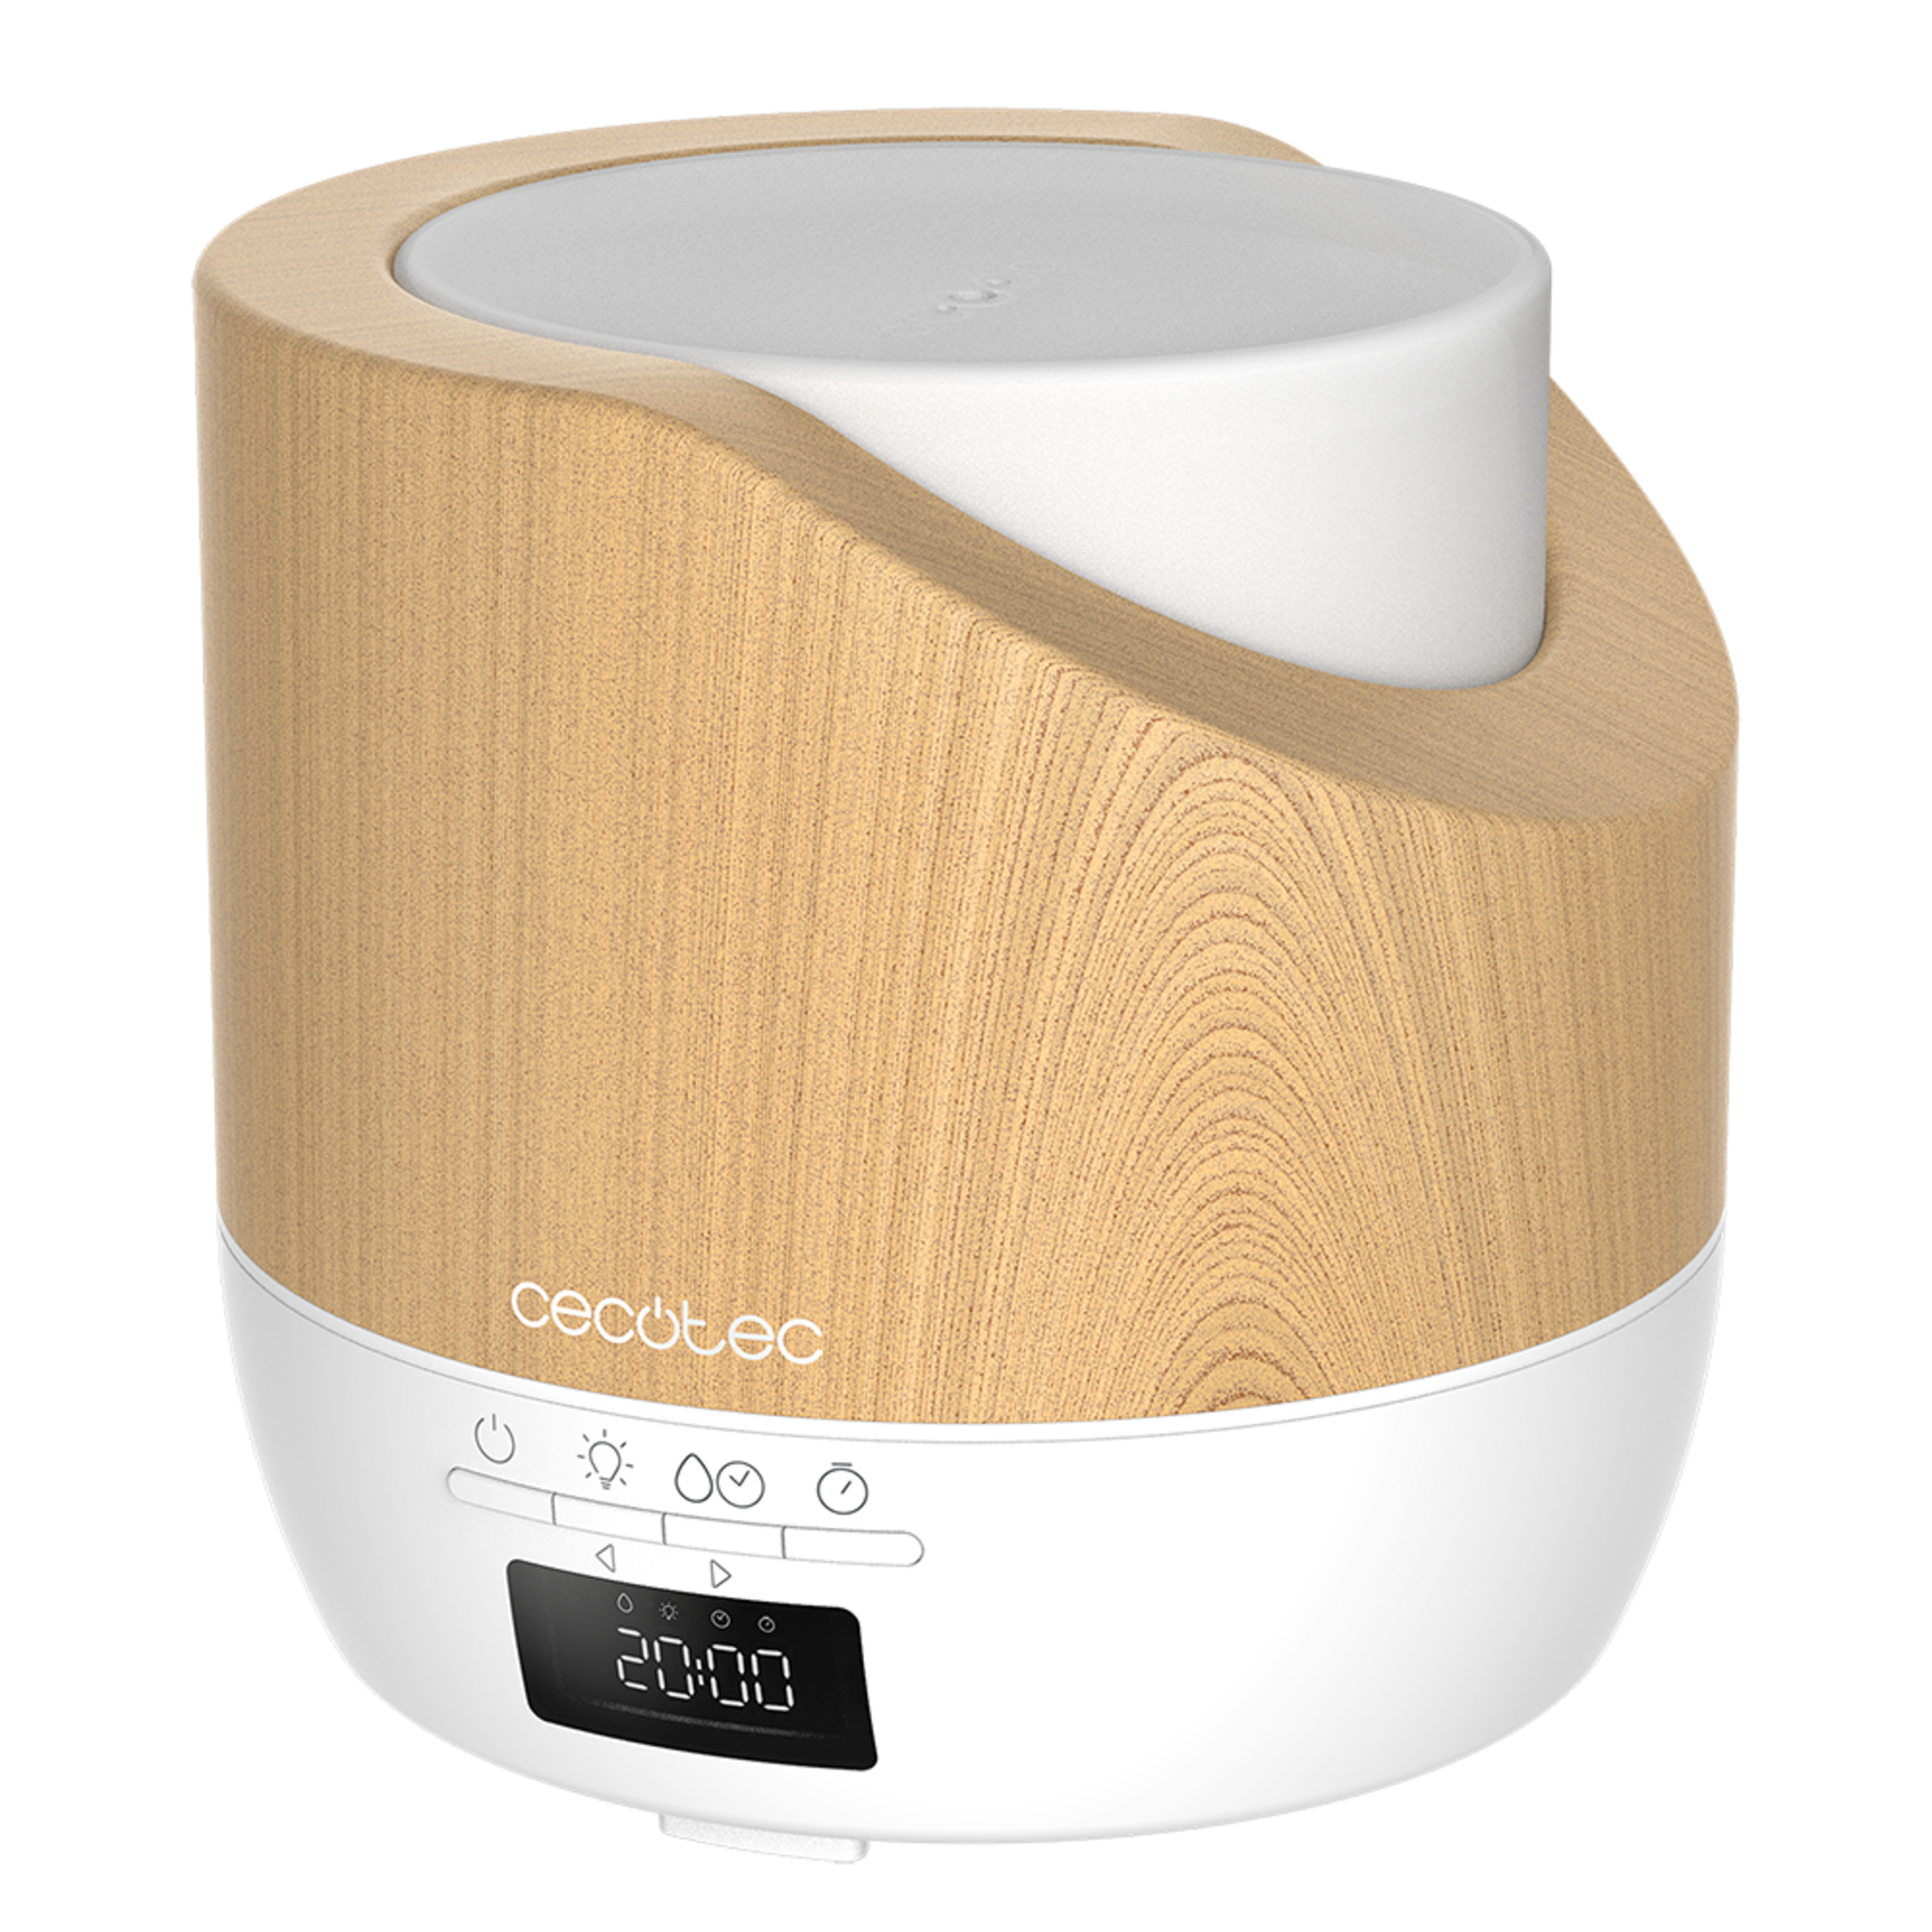 Difusor de aroma PureAroma 500 Smart White Woody. Capacidad 500ml, Pantalla LED, Temporizador 12h, Despertador, 3 Modos de funcionamiento, Cobertura 30m2